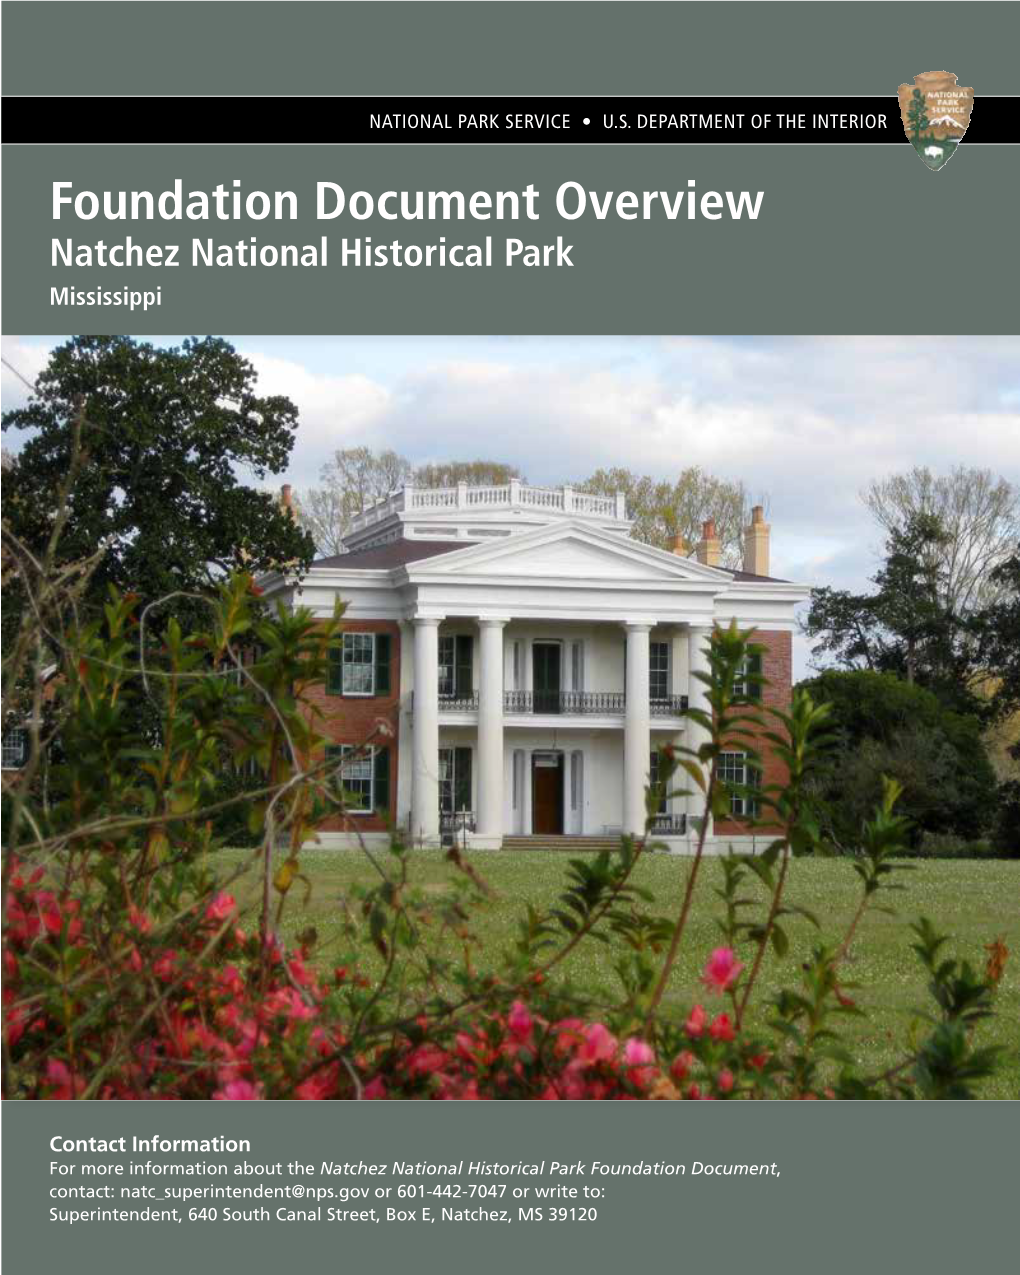 Foundation Document Overview, Natchez National Historical Park, Mississippi